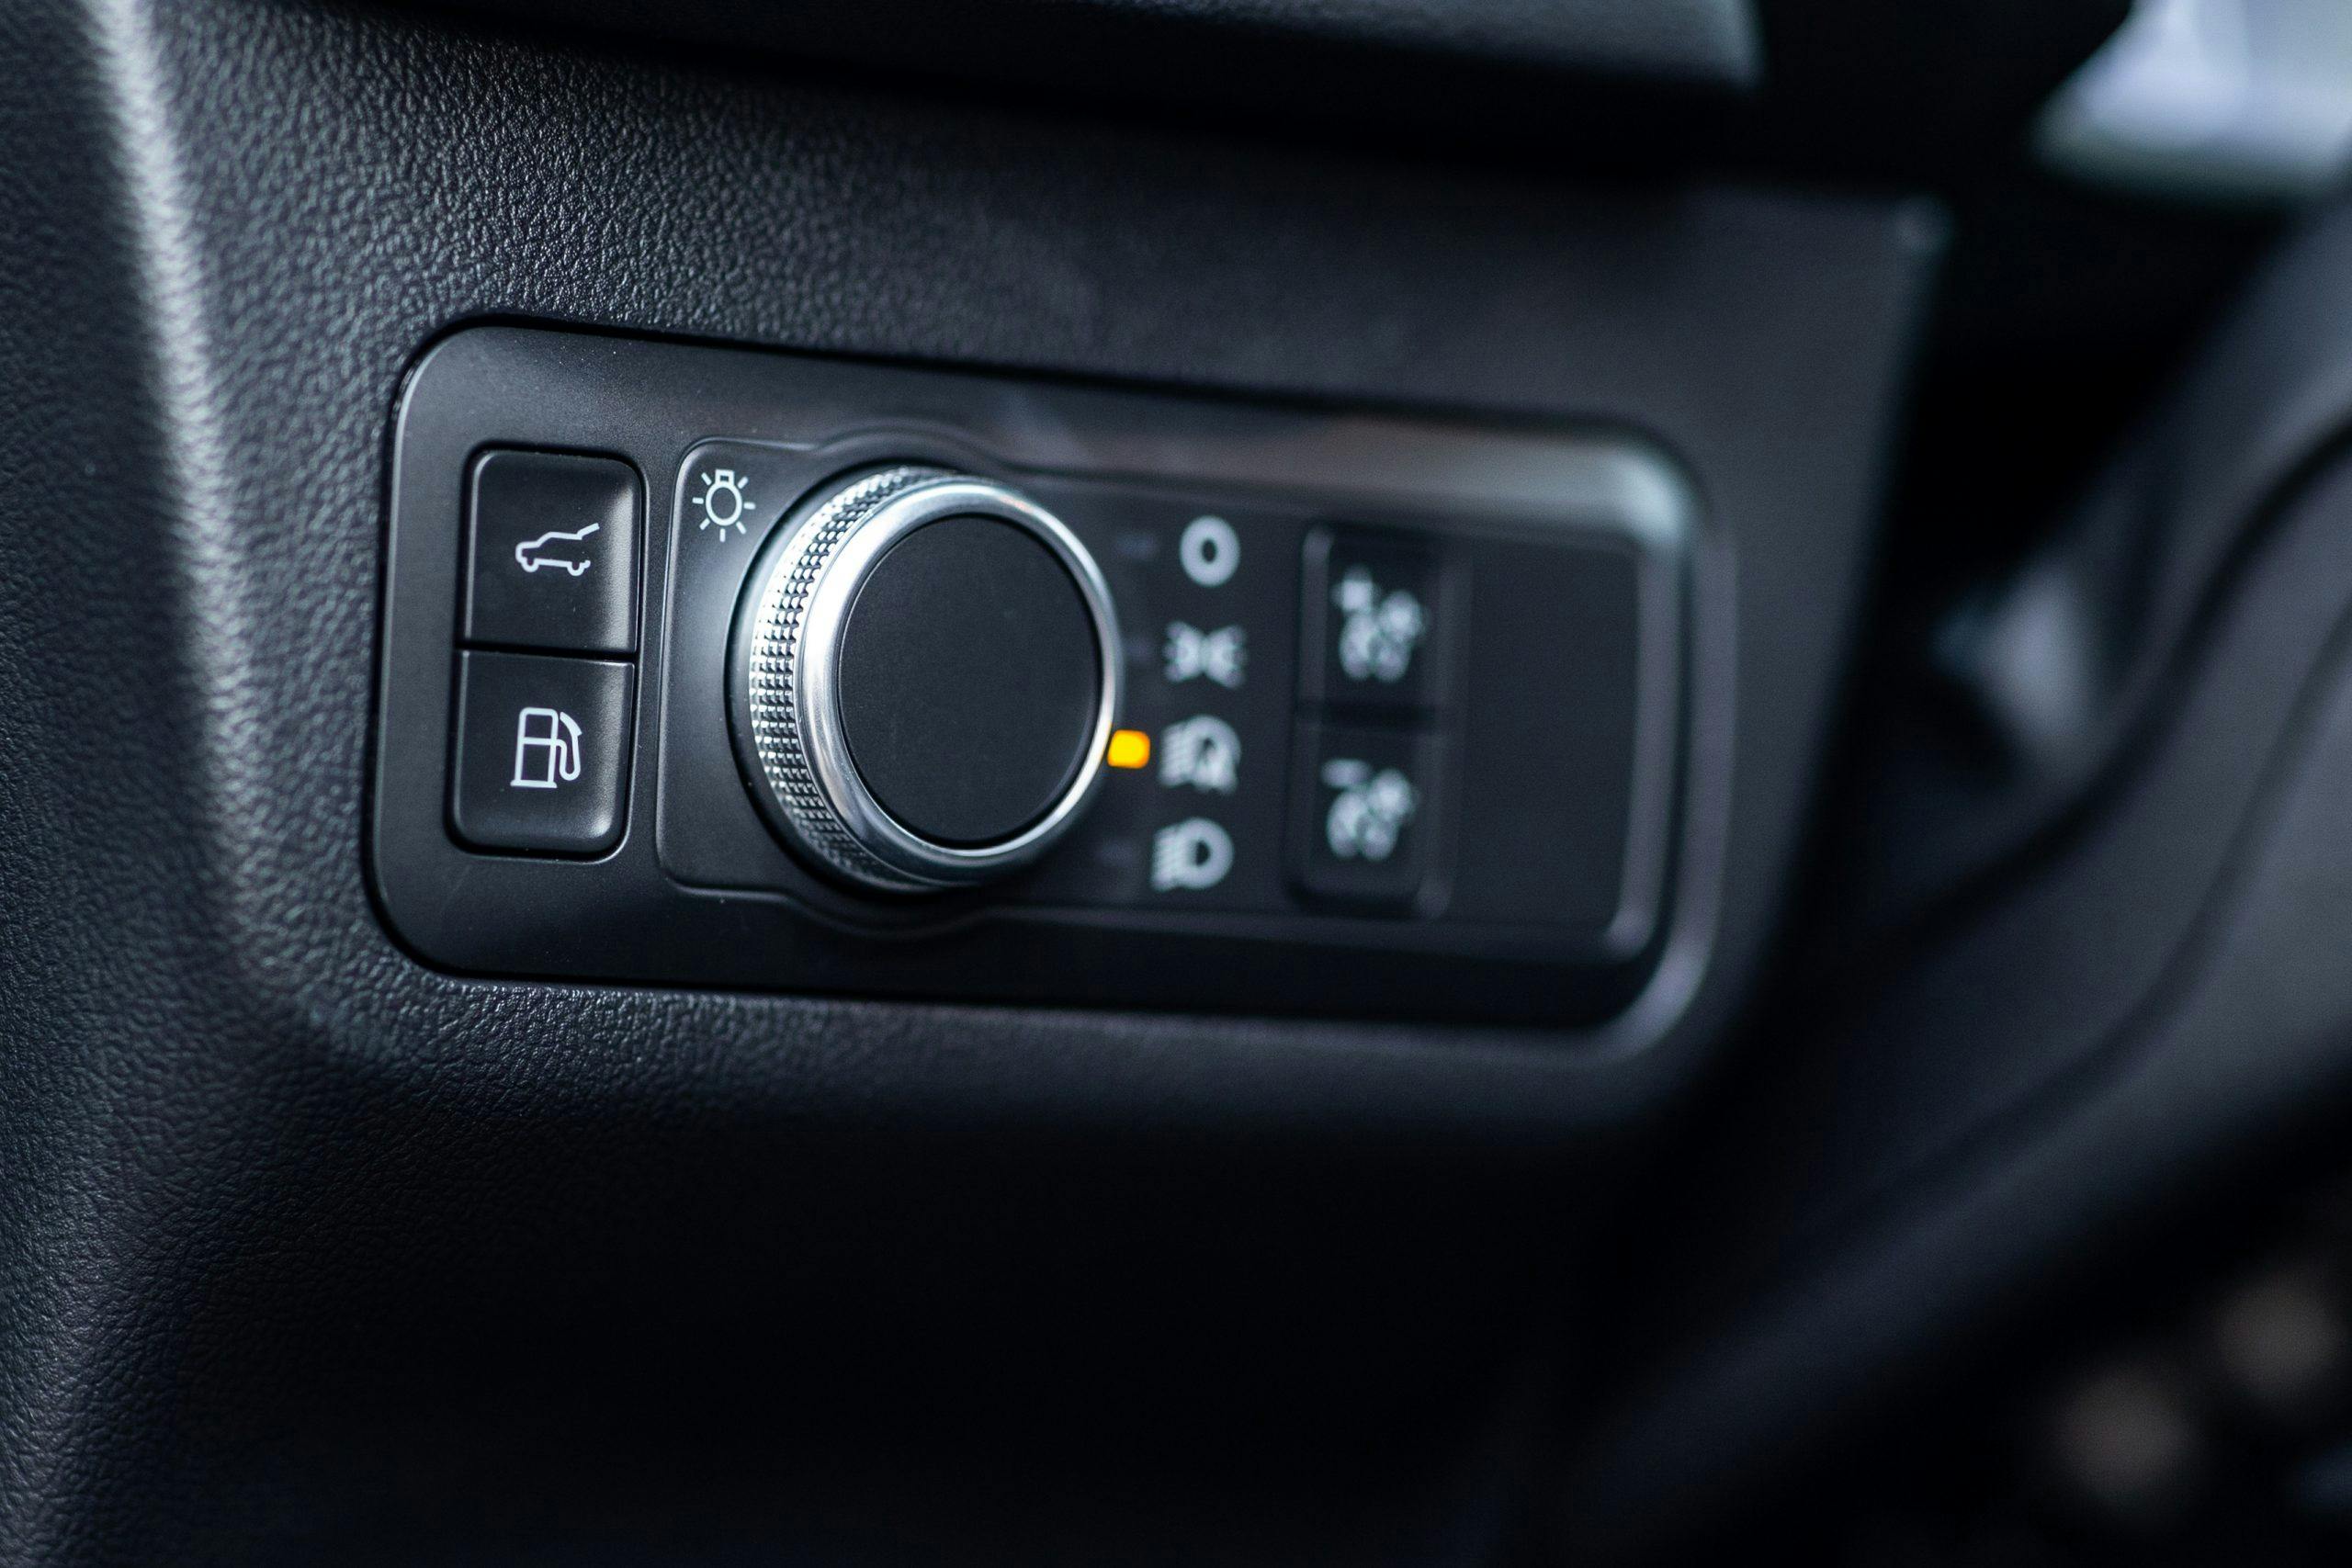 2021 Ford Escape PHEV interior controls detail